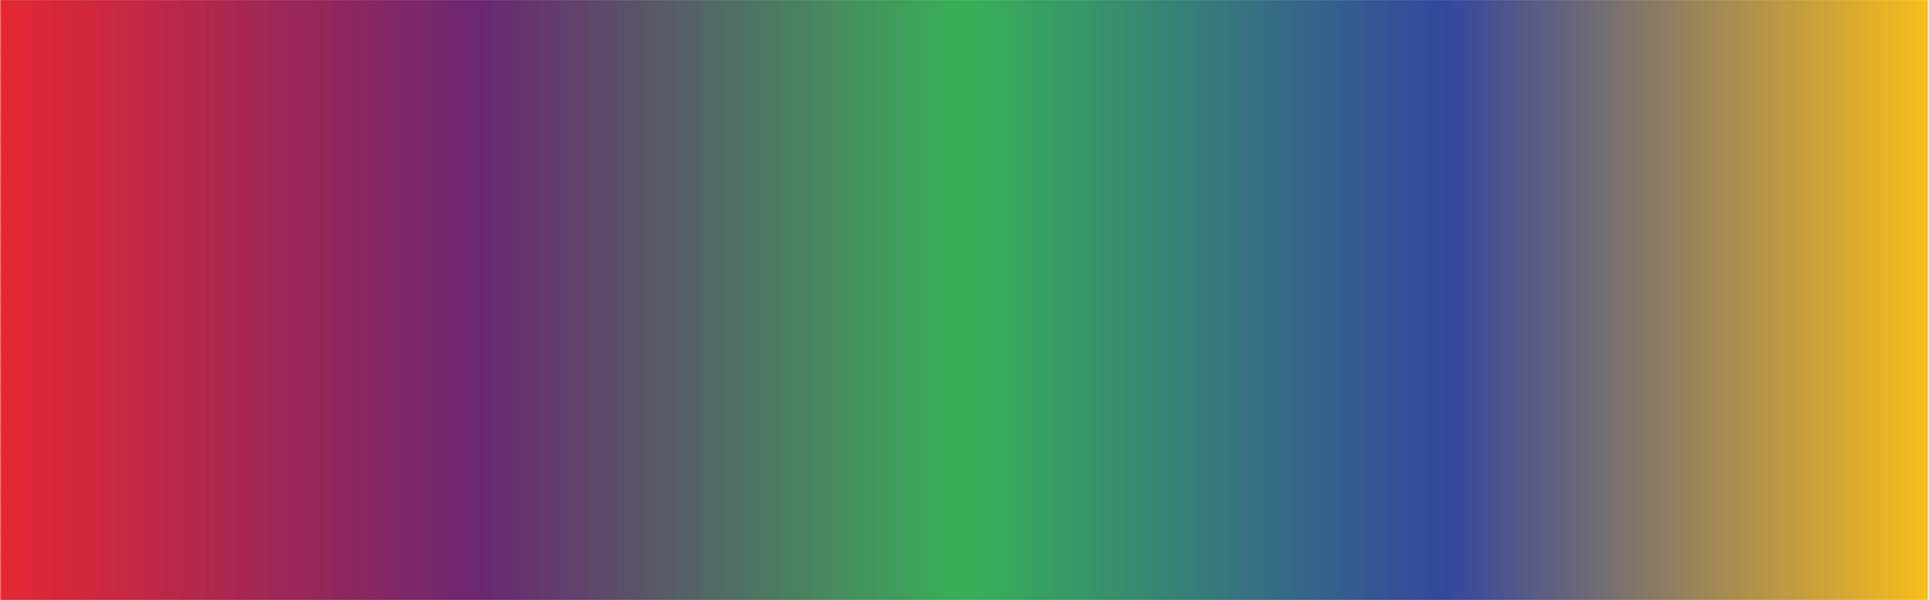 A colorful gradient